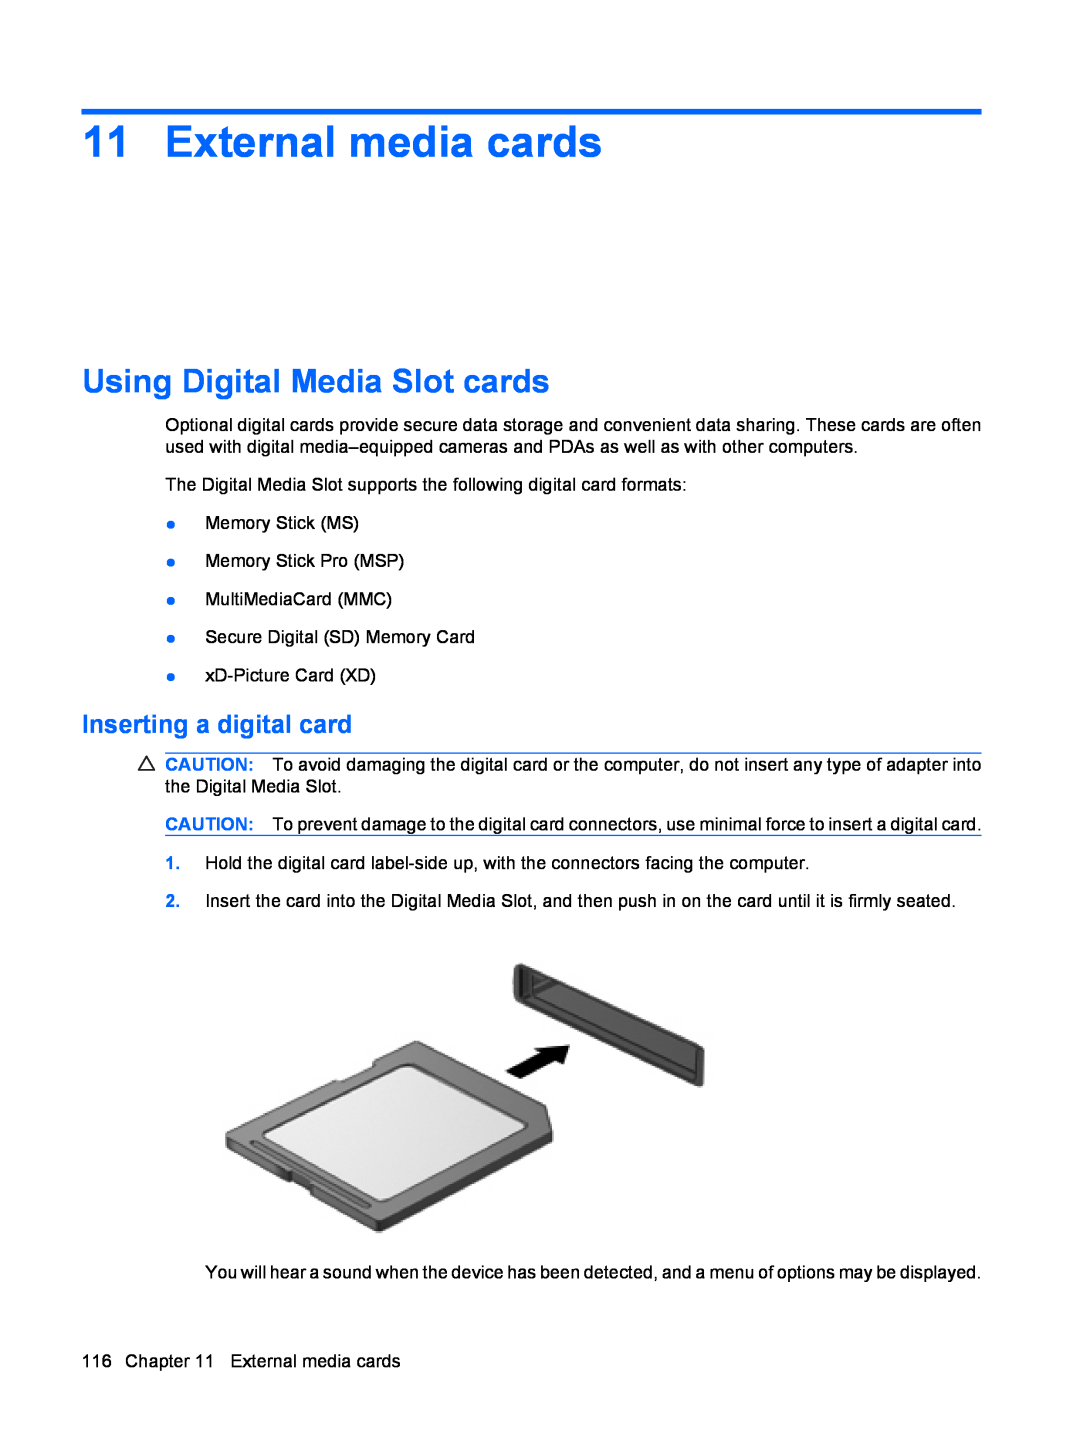 HP dv4-2160us manual External media cards, Using Digital Media Slot cards, Inserting a digital card 